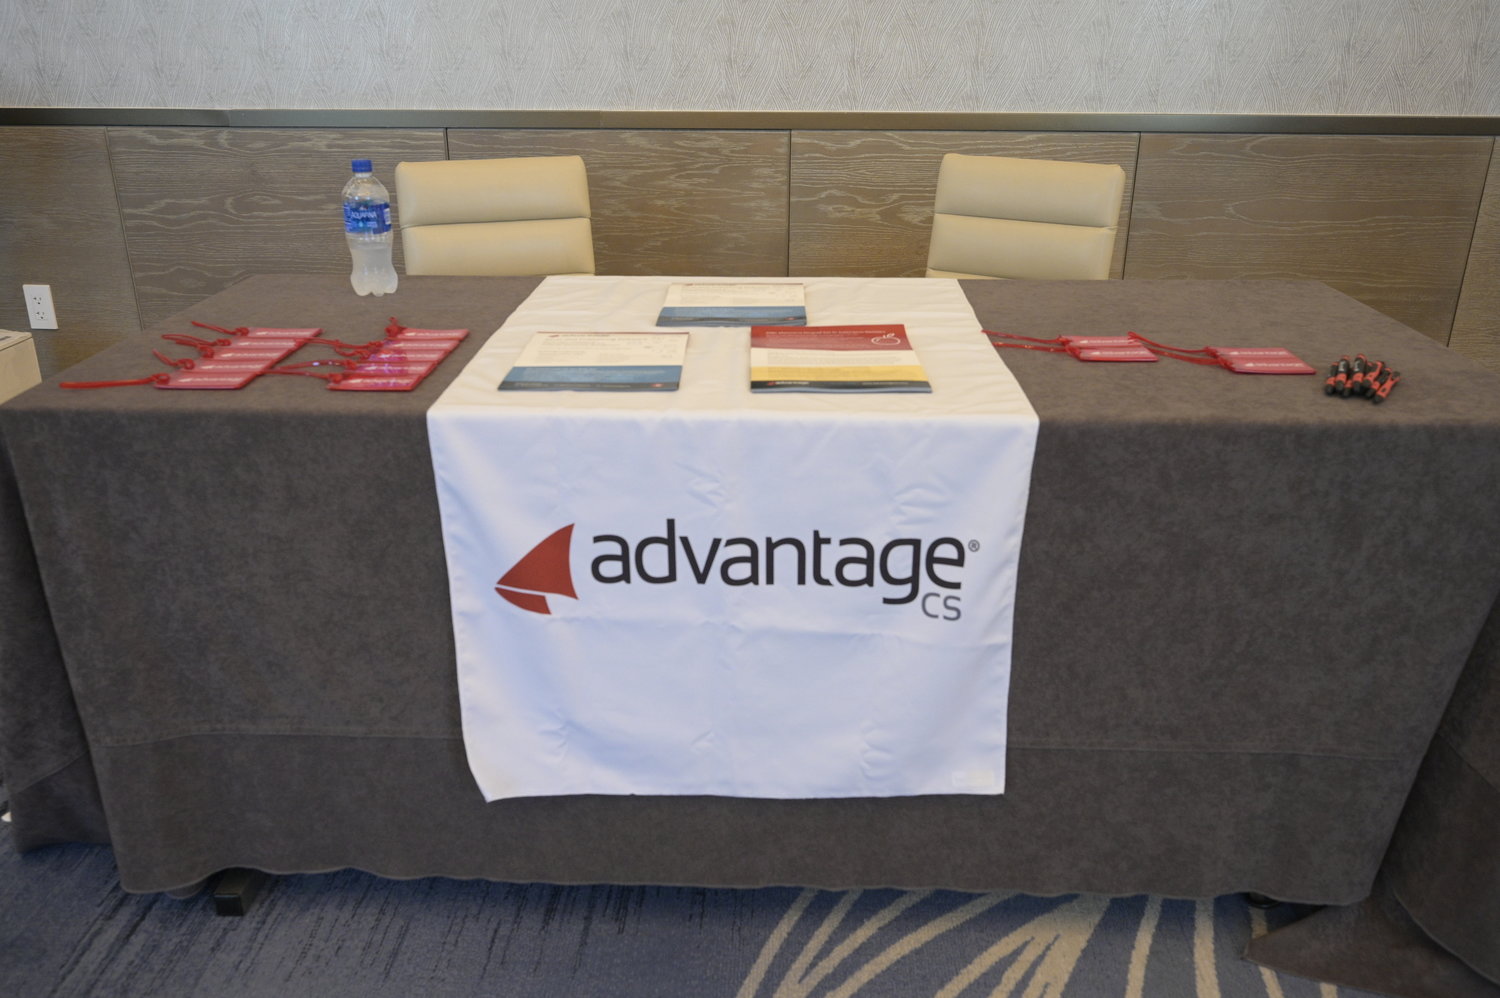 Advantage CS -- a Mega-Conference exhibitor (Photo by Phelan M. Ebenhack)